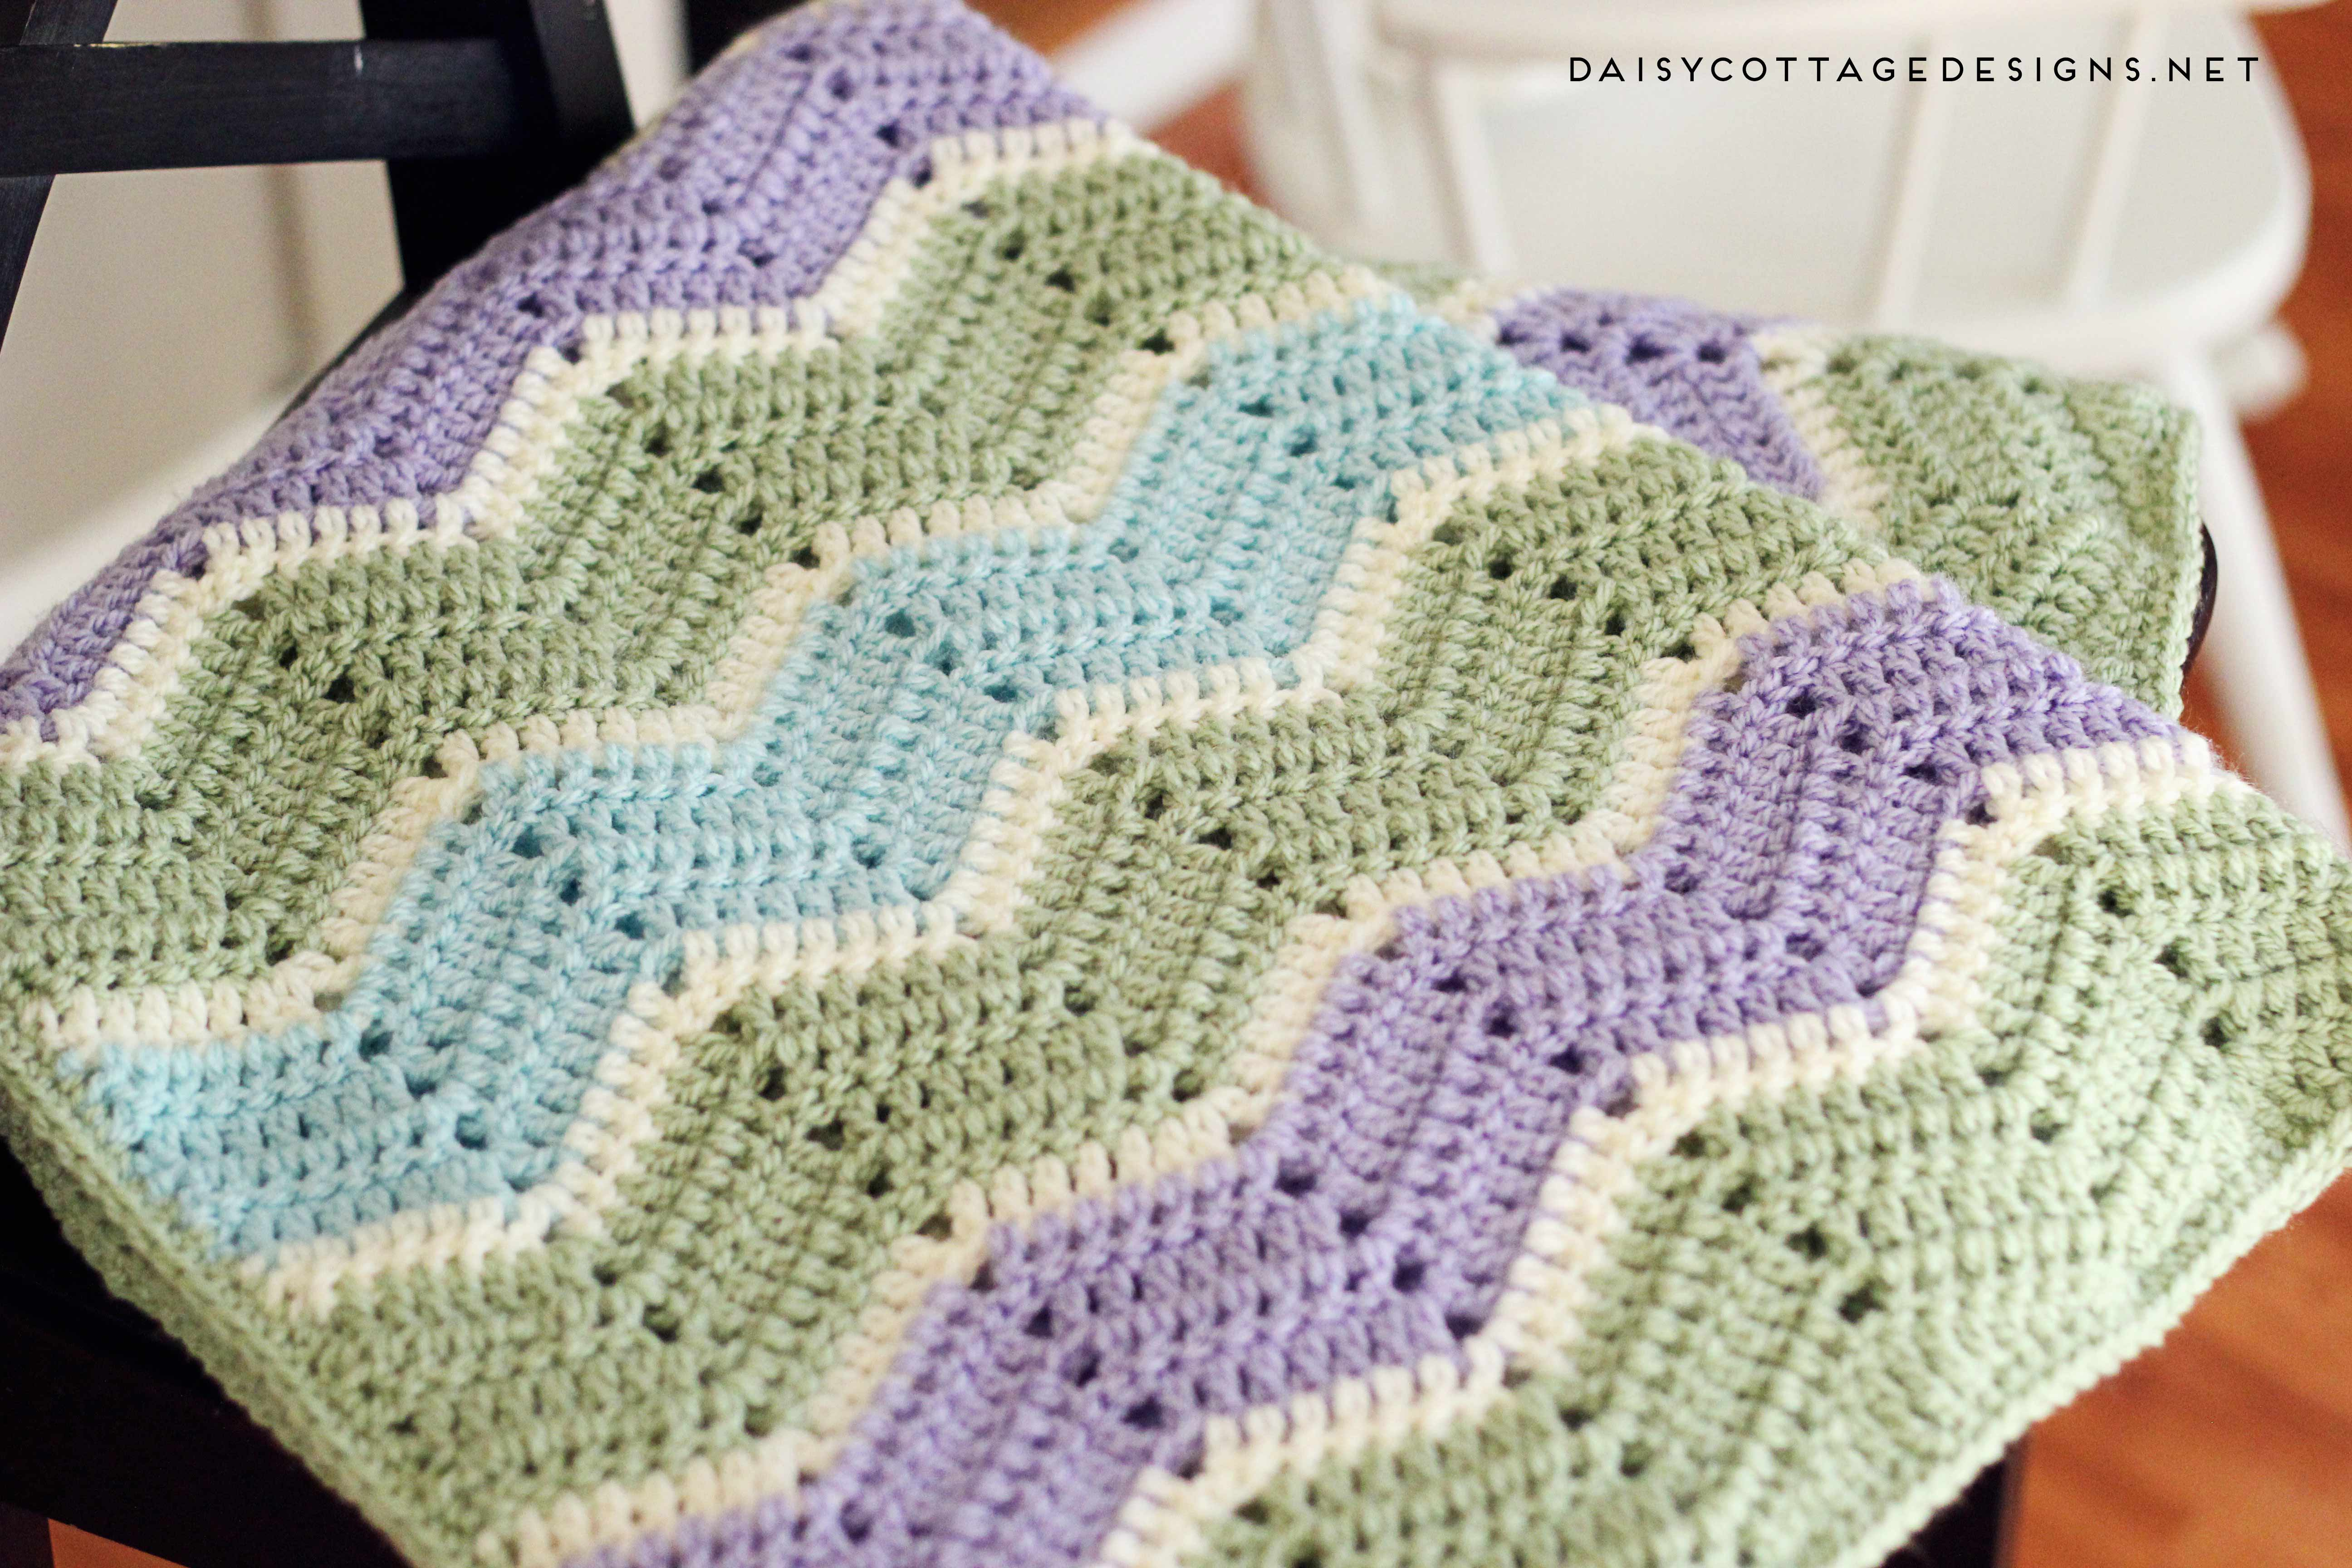 Crochet Chevron Baby Blanket Free Pattern Easy Chevron Blanket Crochet Pattern Daisy Cottage Designs